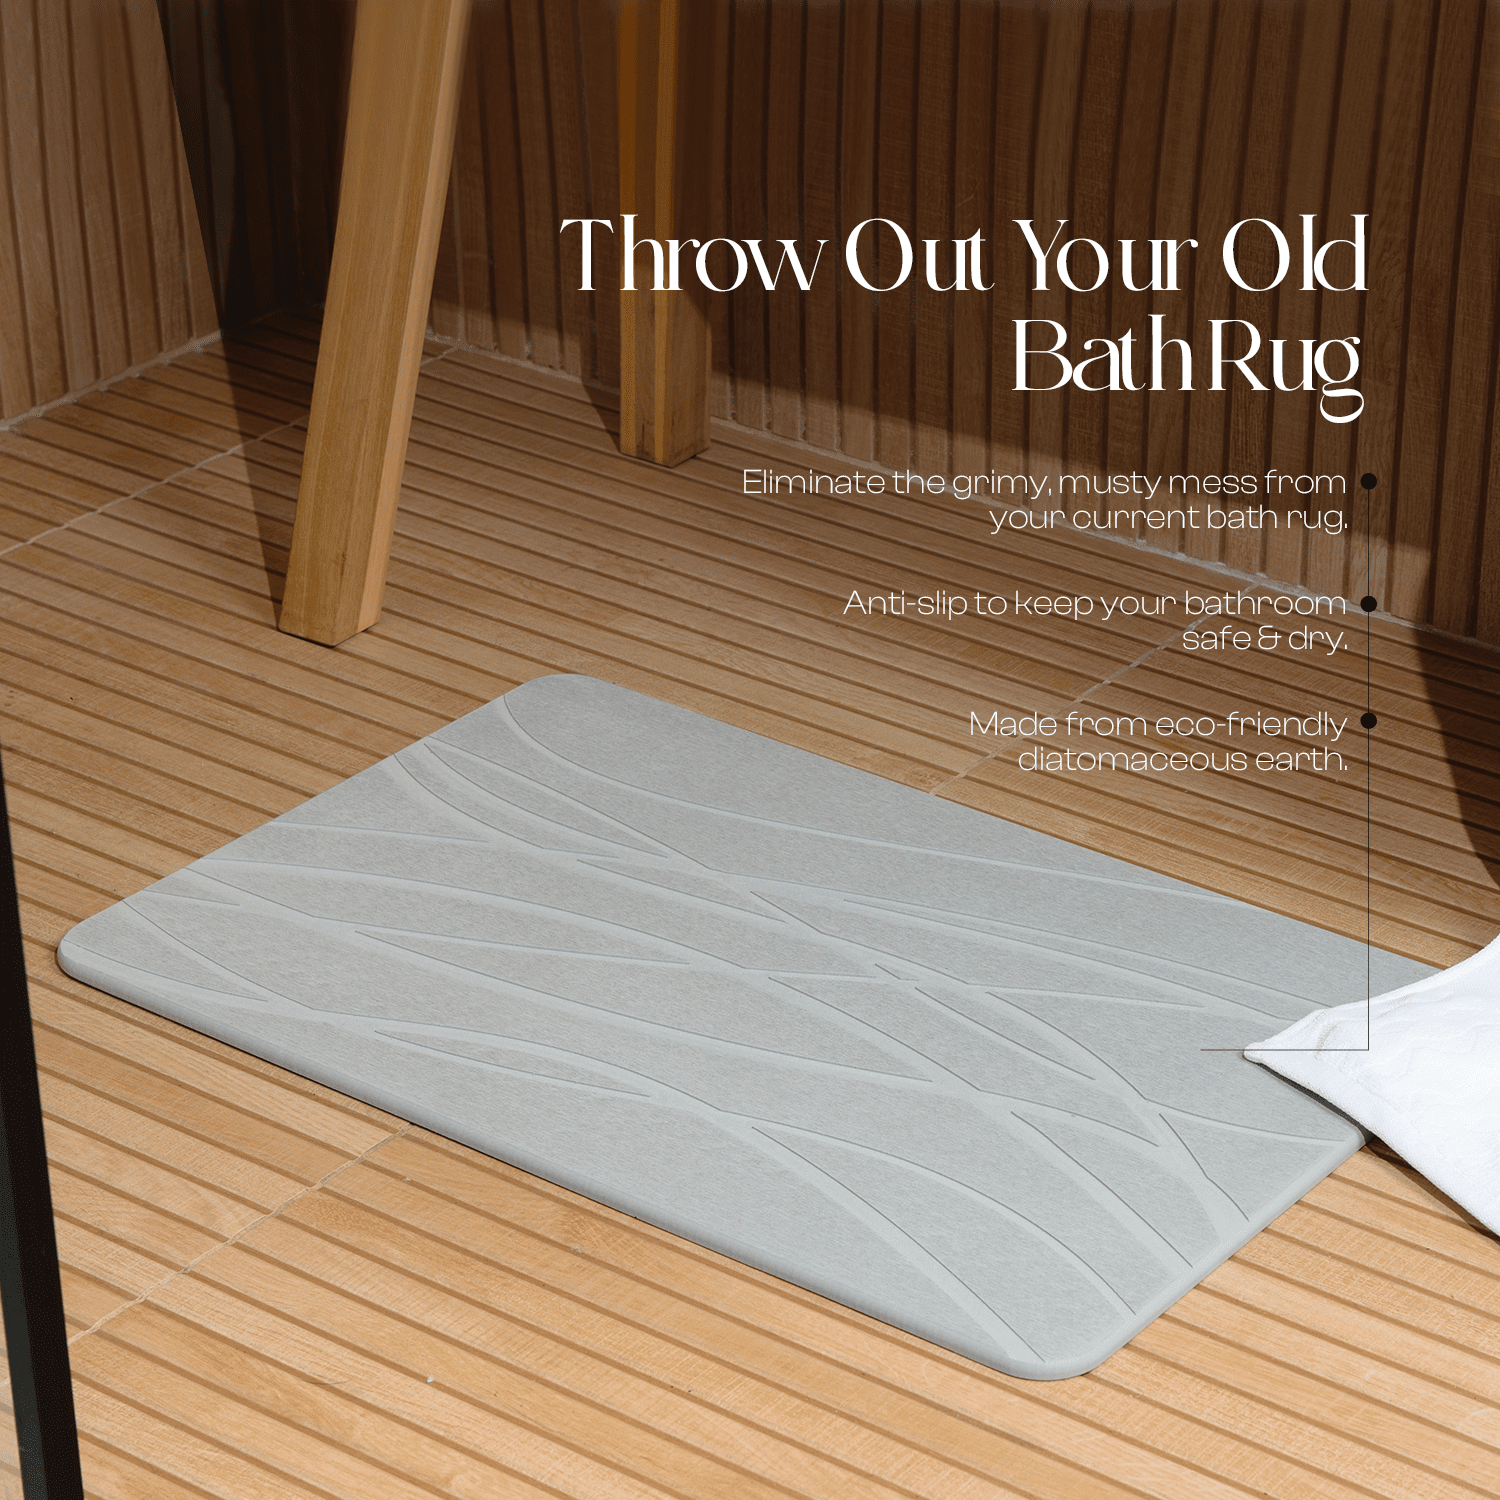 Grey Bath Floor Mat, Non-slip Absorbent Rug Bathroom Carpet Stone